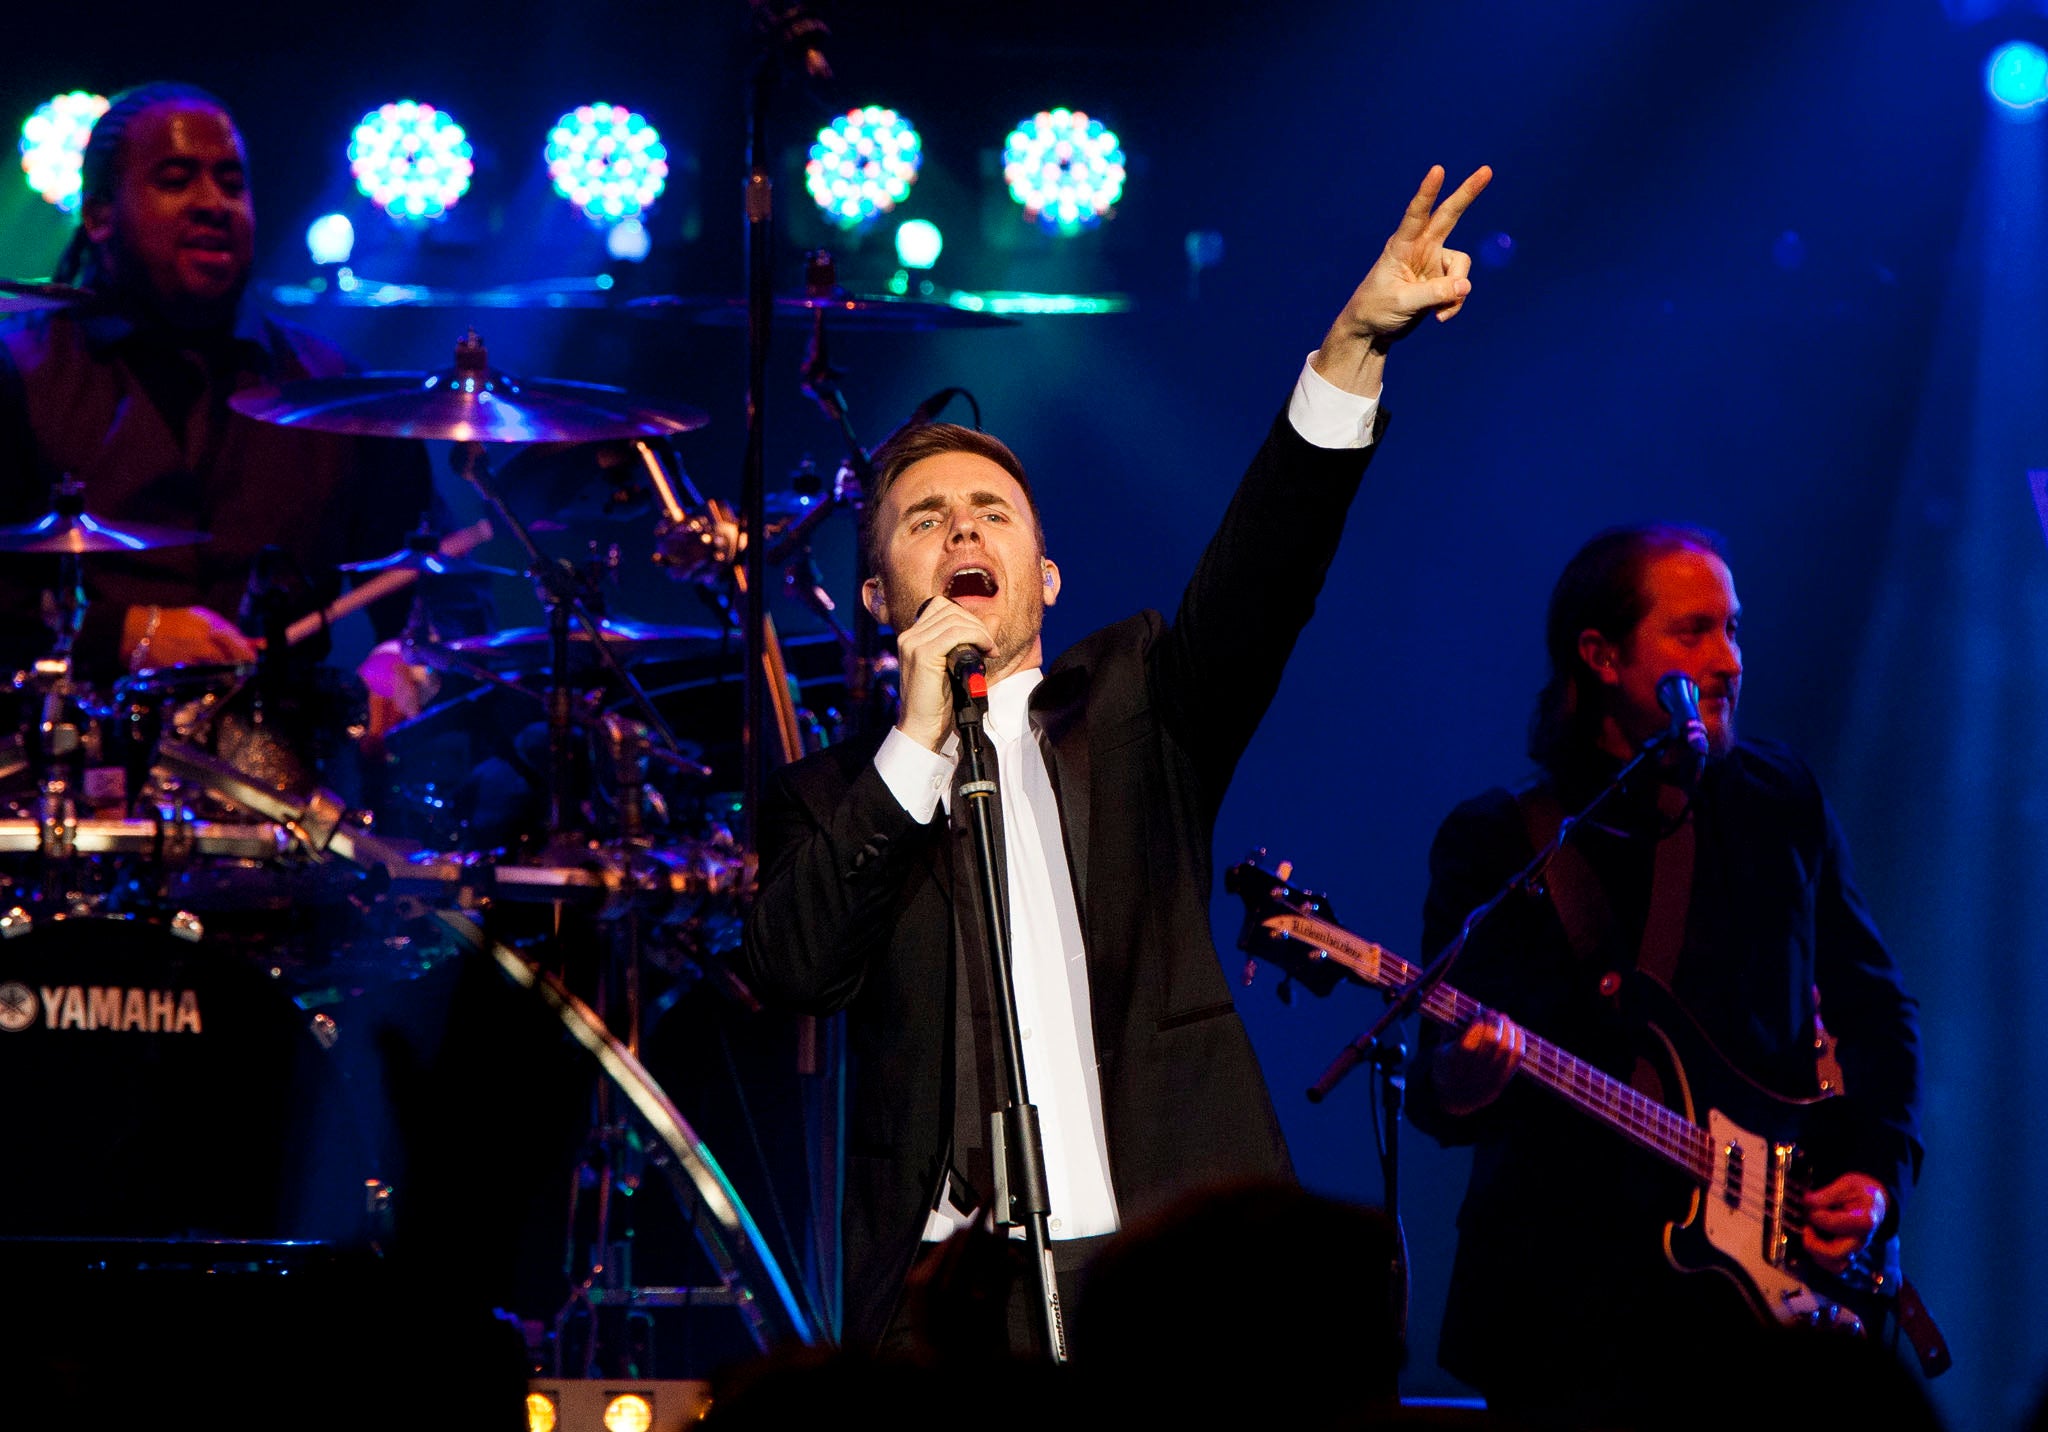 Gary Barlow performs in concert at the Royal Albert Hall, London.